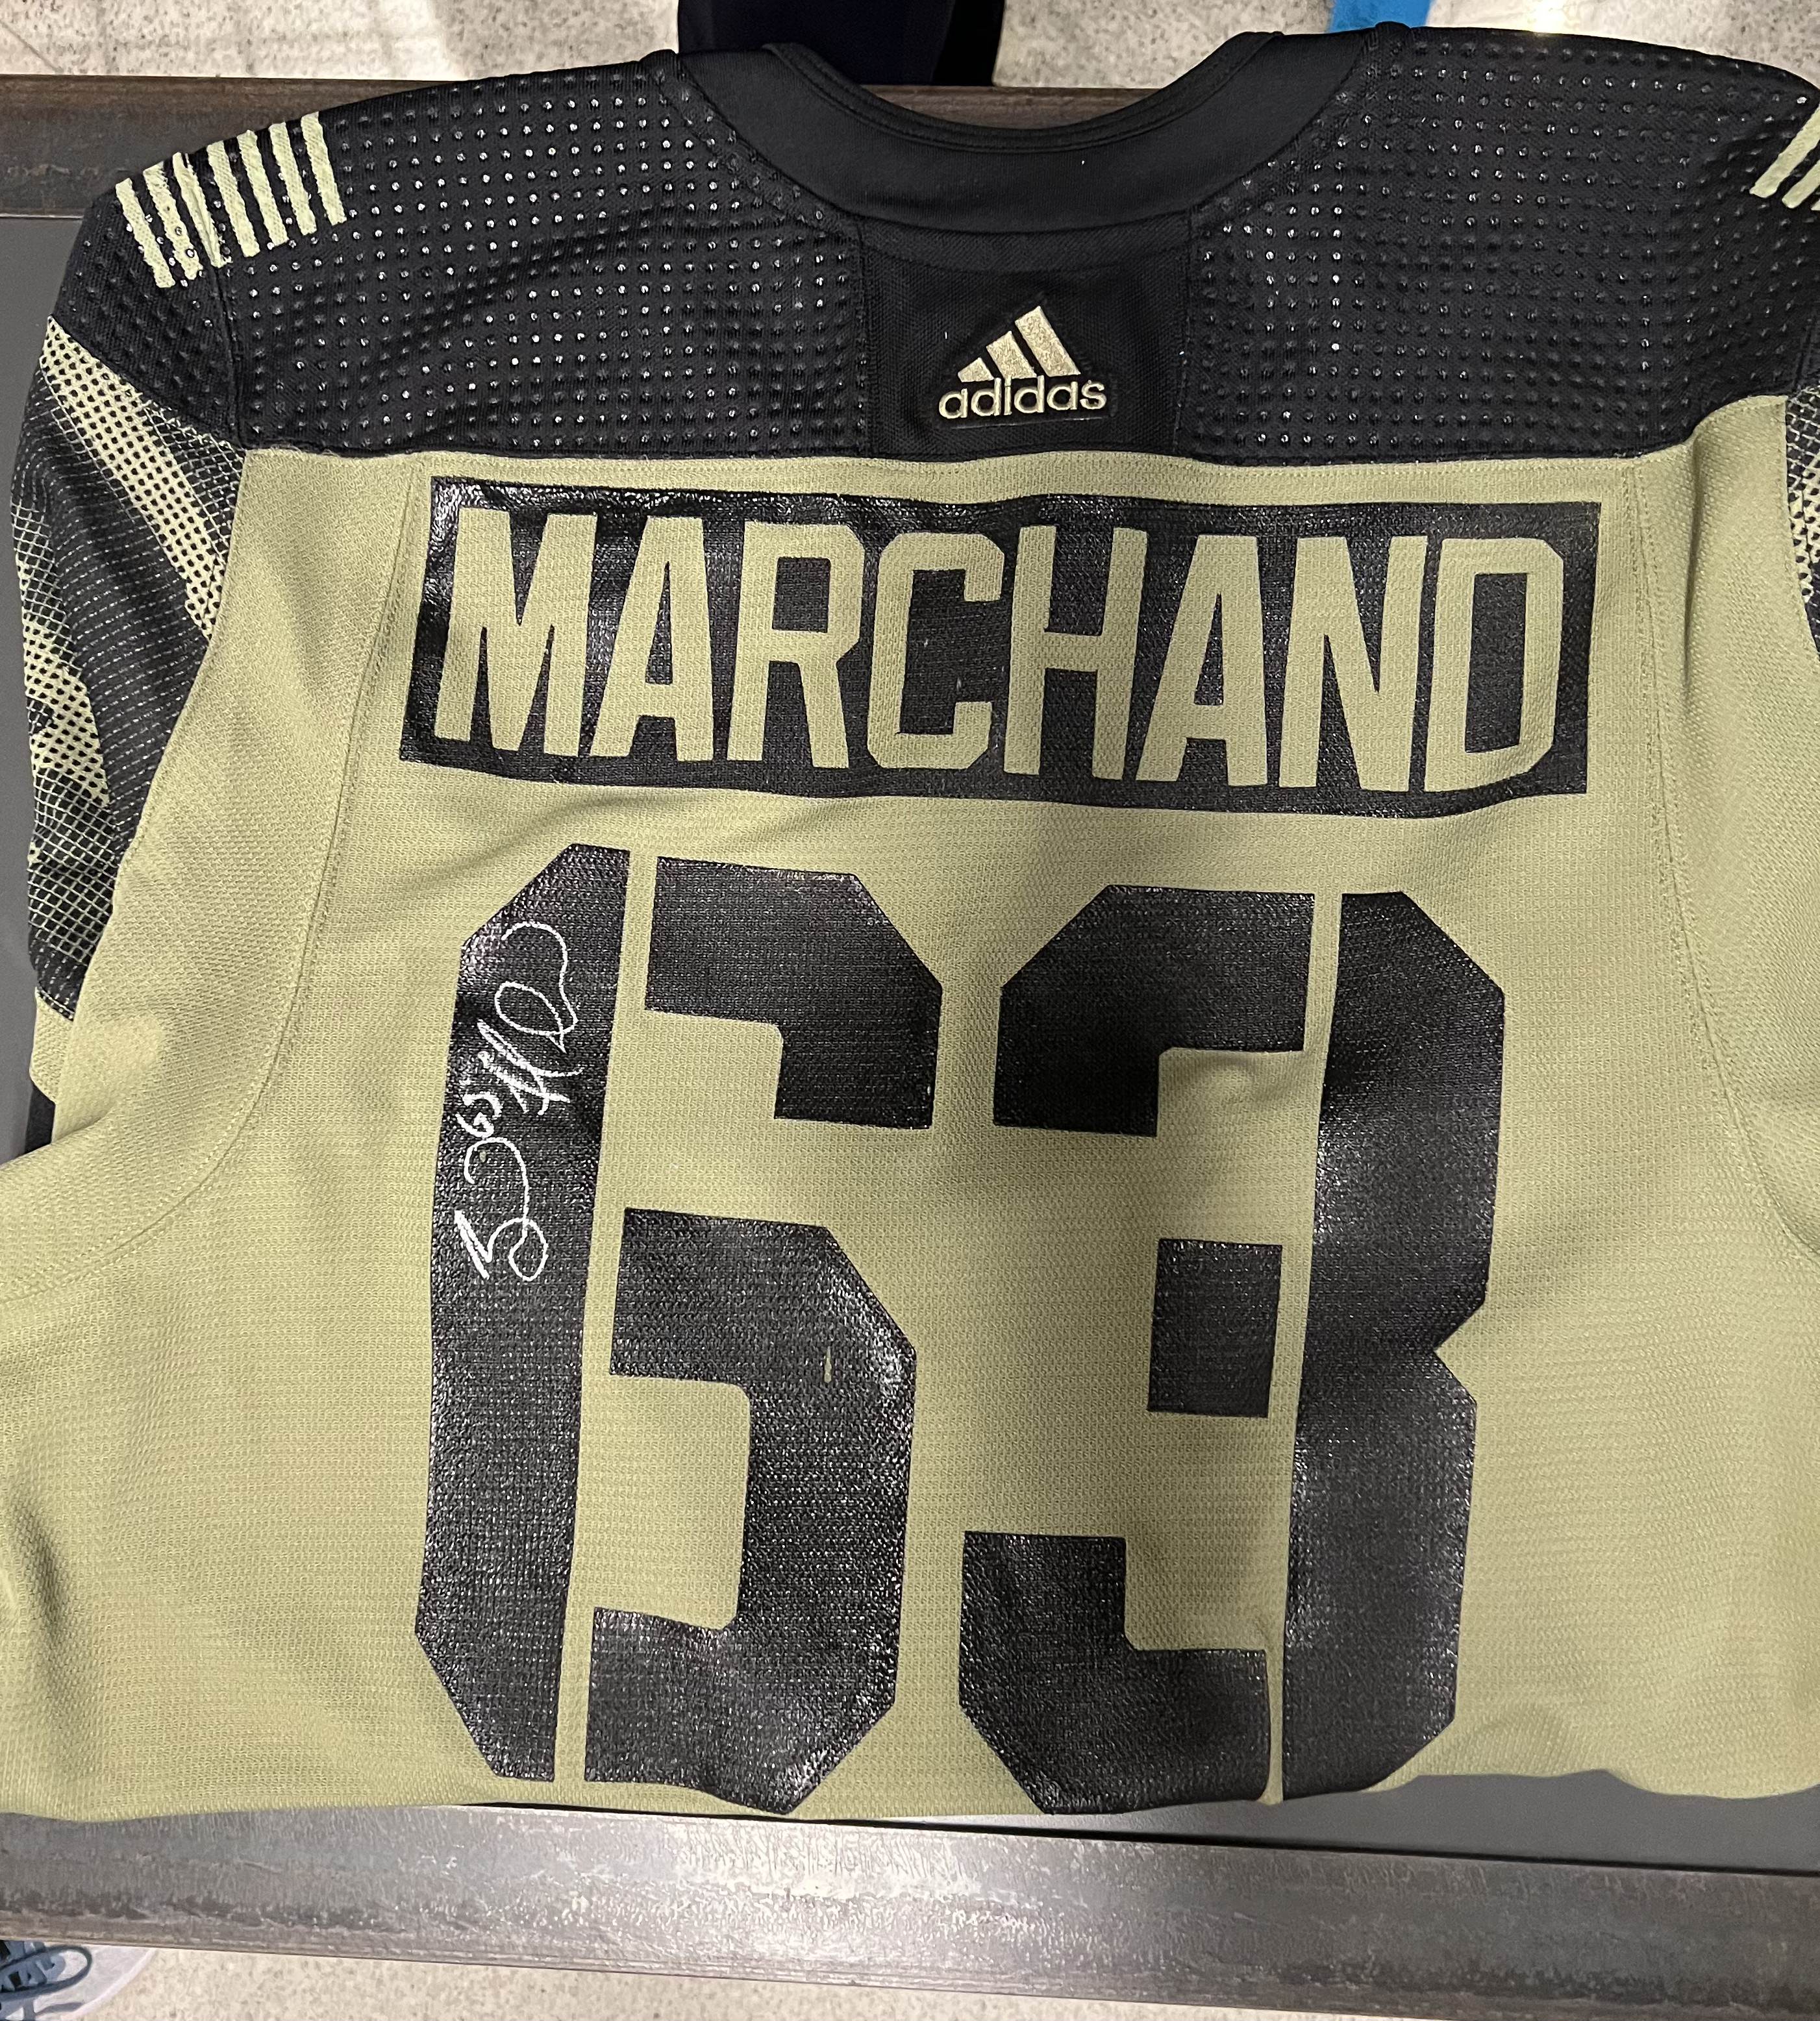 Brad Marchand Boston Bruins St. Patricks Day jersey photo 8x10